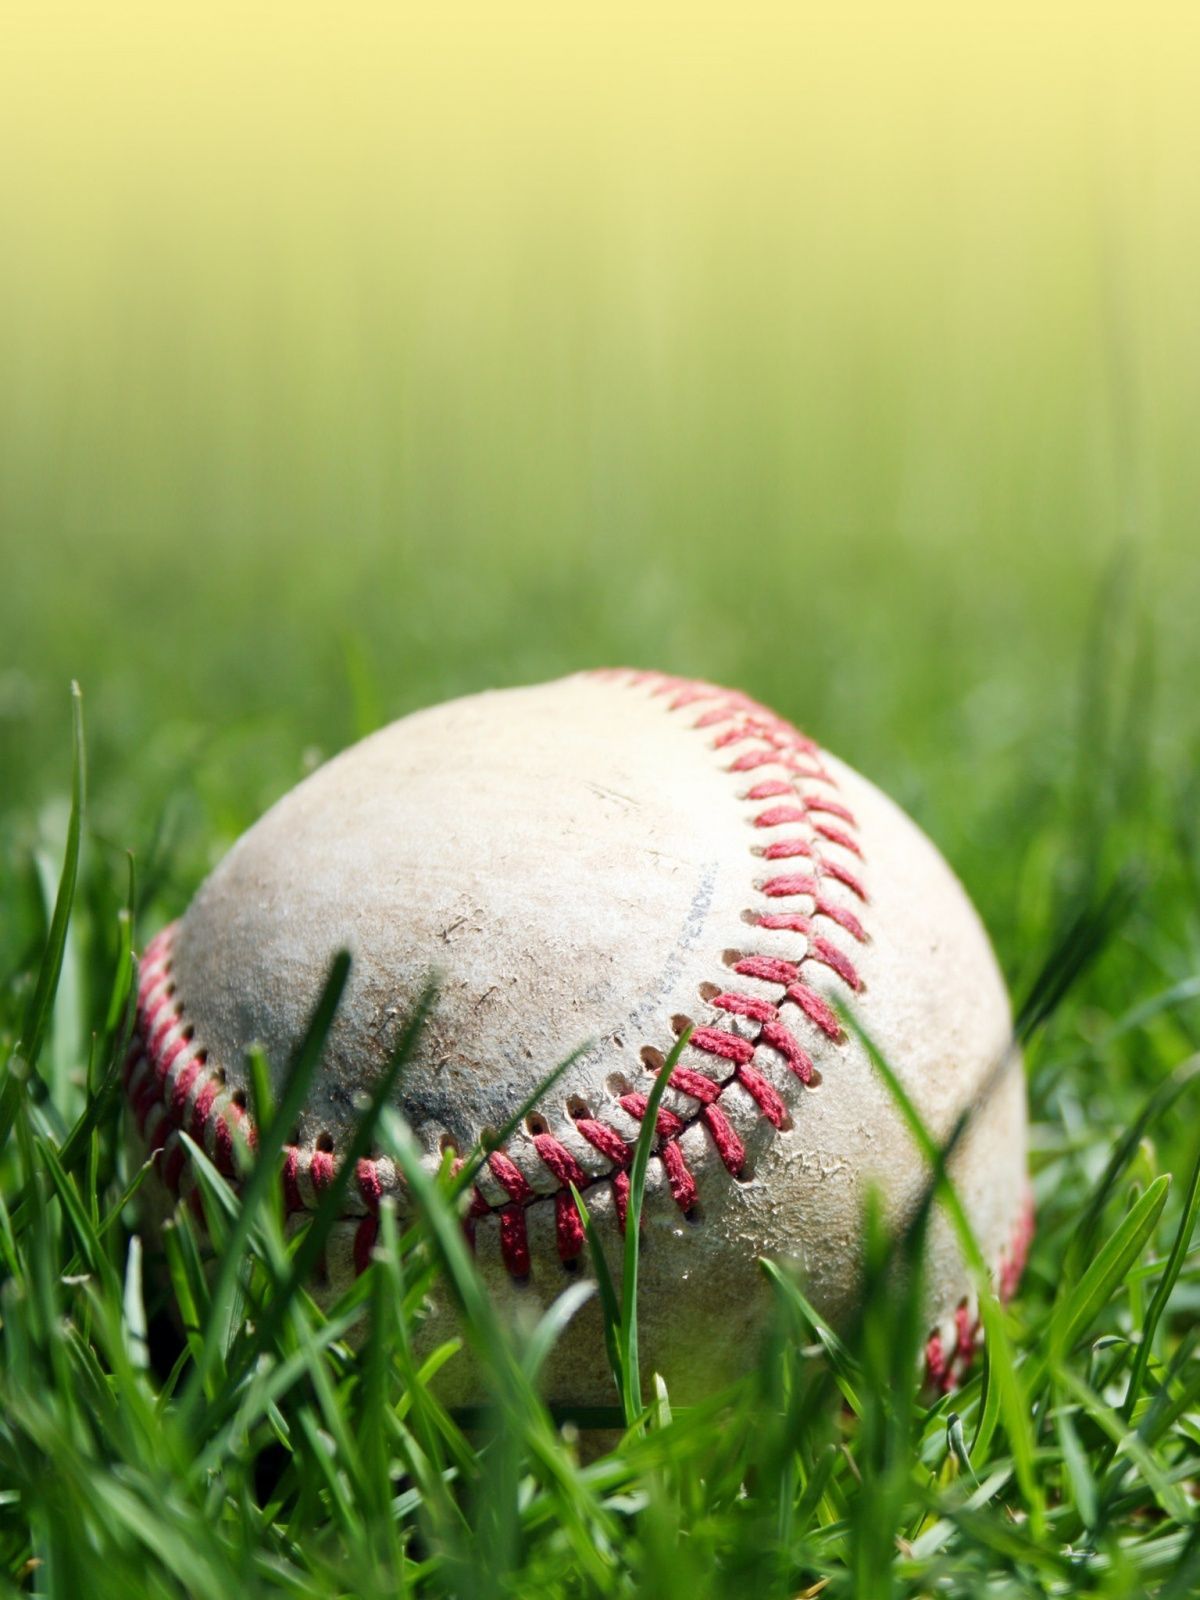 Download Dodgers Field iPhone Baseball Wallpaper  Wallpaperscom